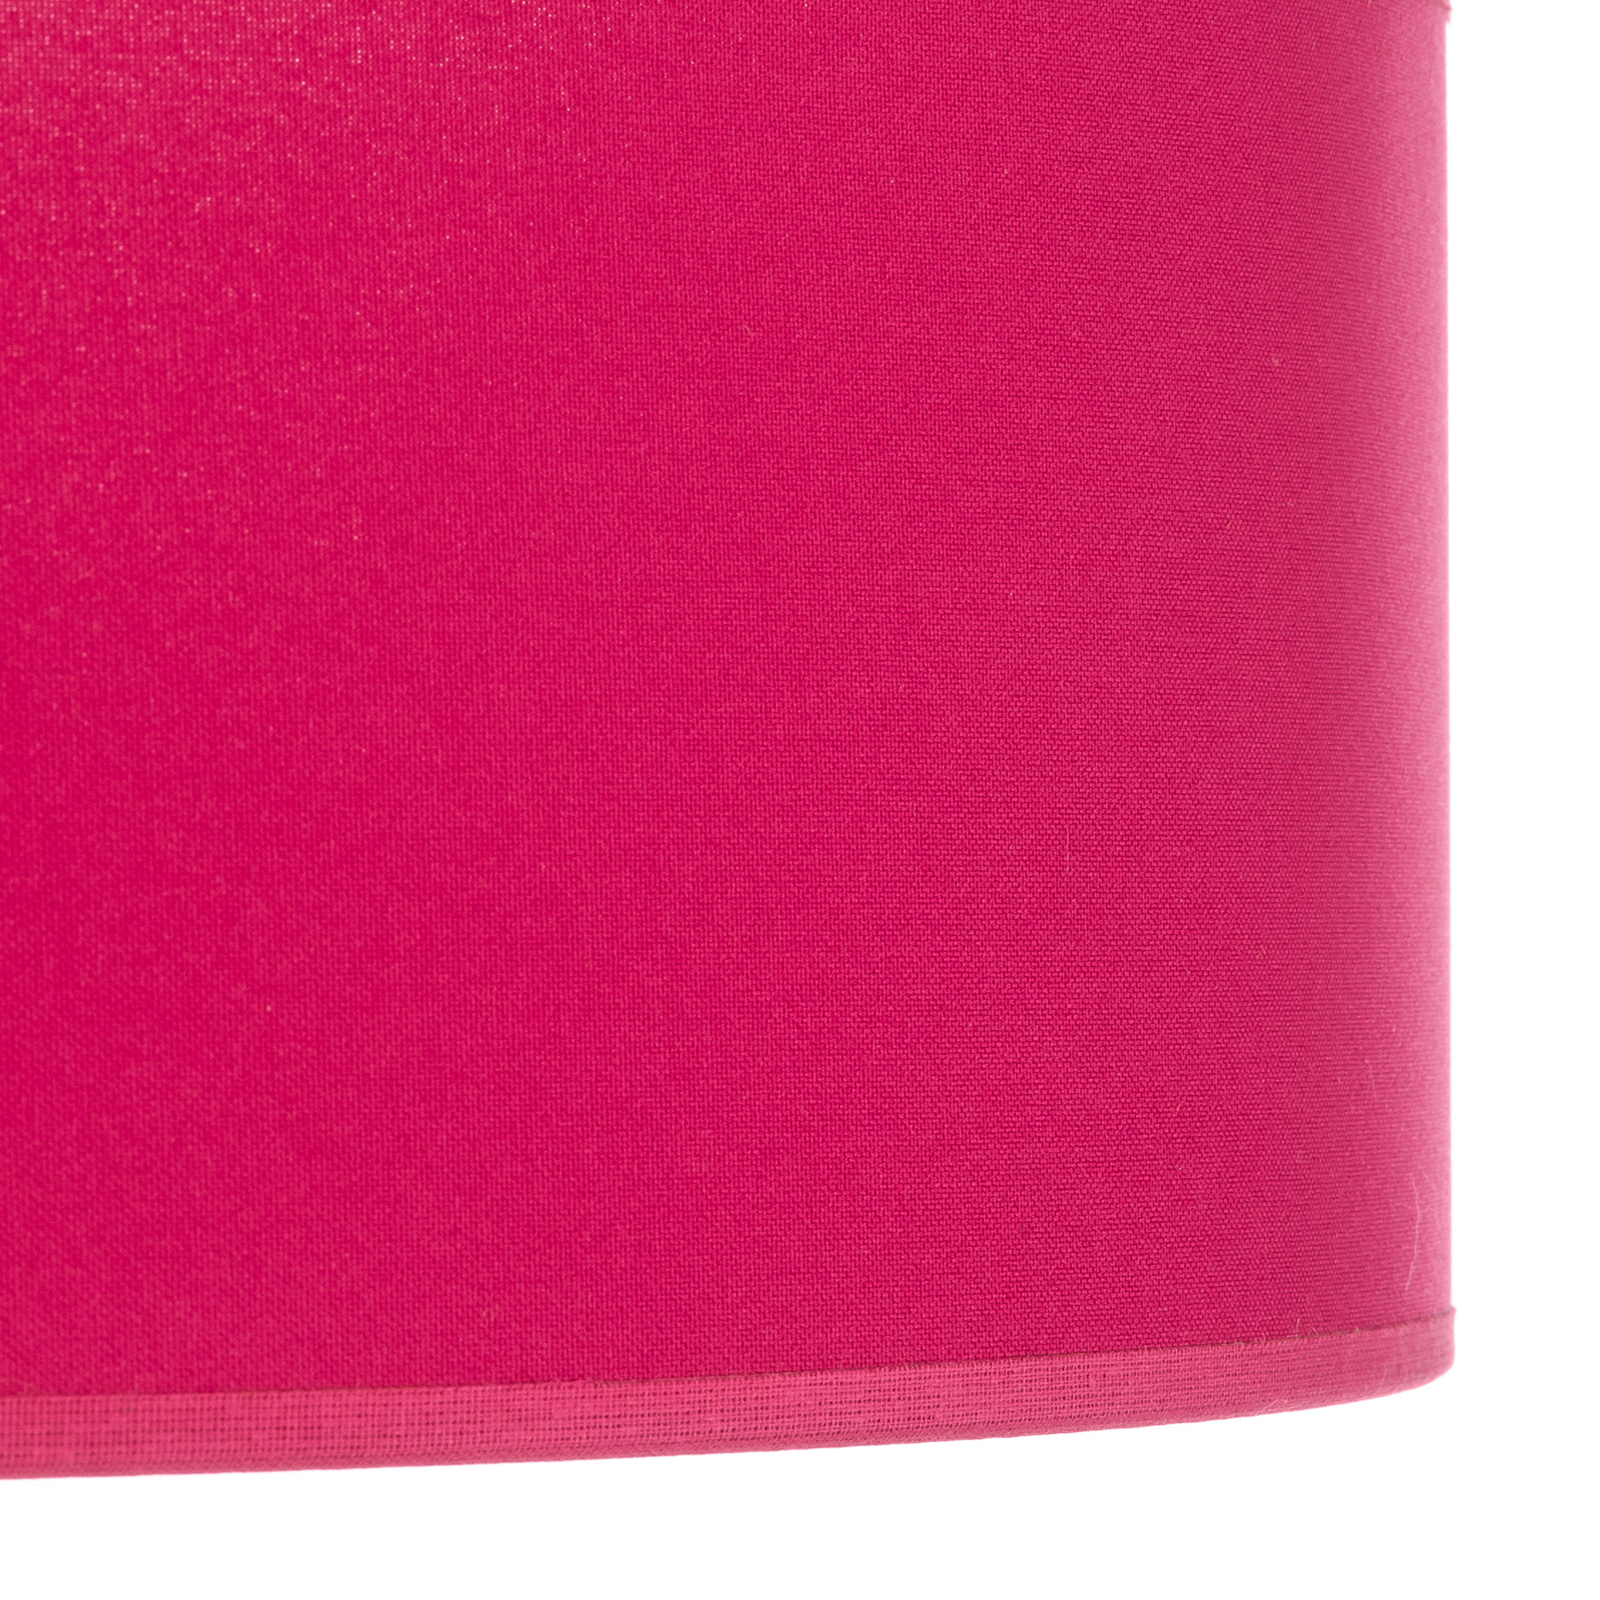 Euluna Roller, cor-de-rosa, Ø 50 cm